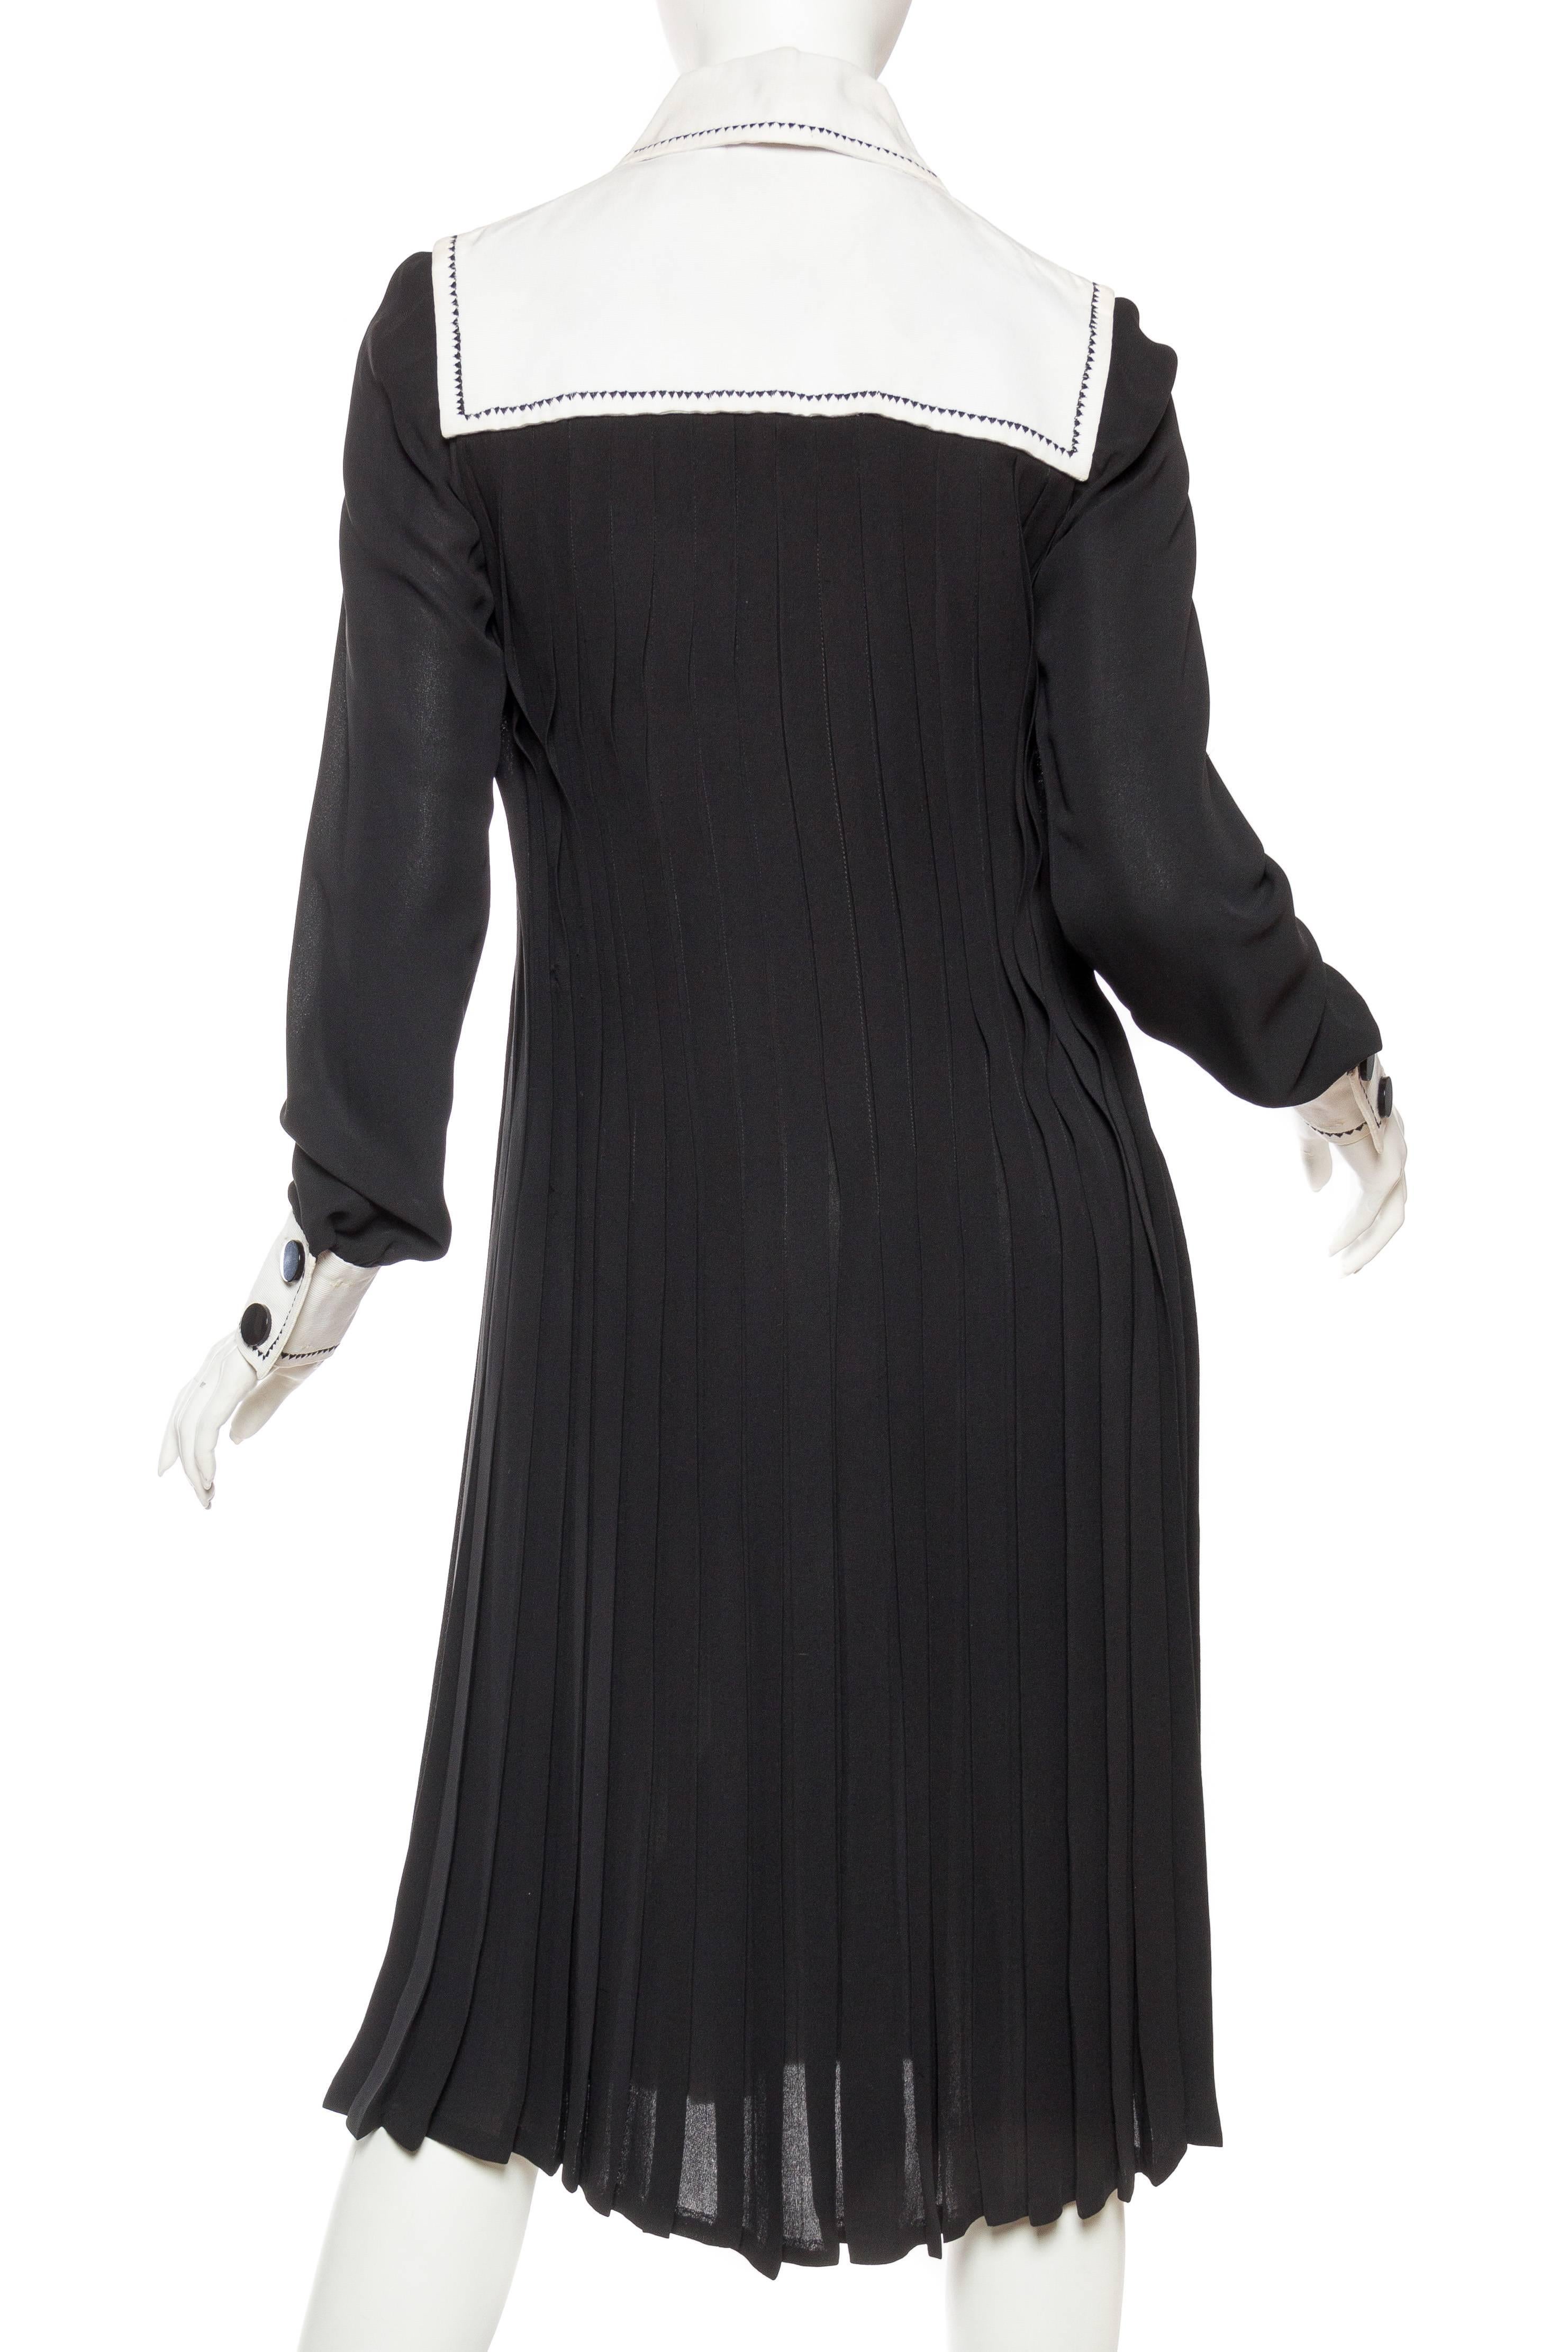 1960S PERTEGAZ COUTURE Black & White Silk Pleated Mod Dress 1